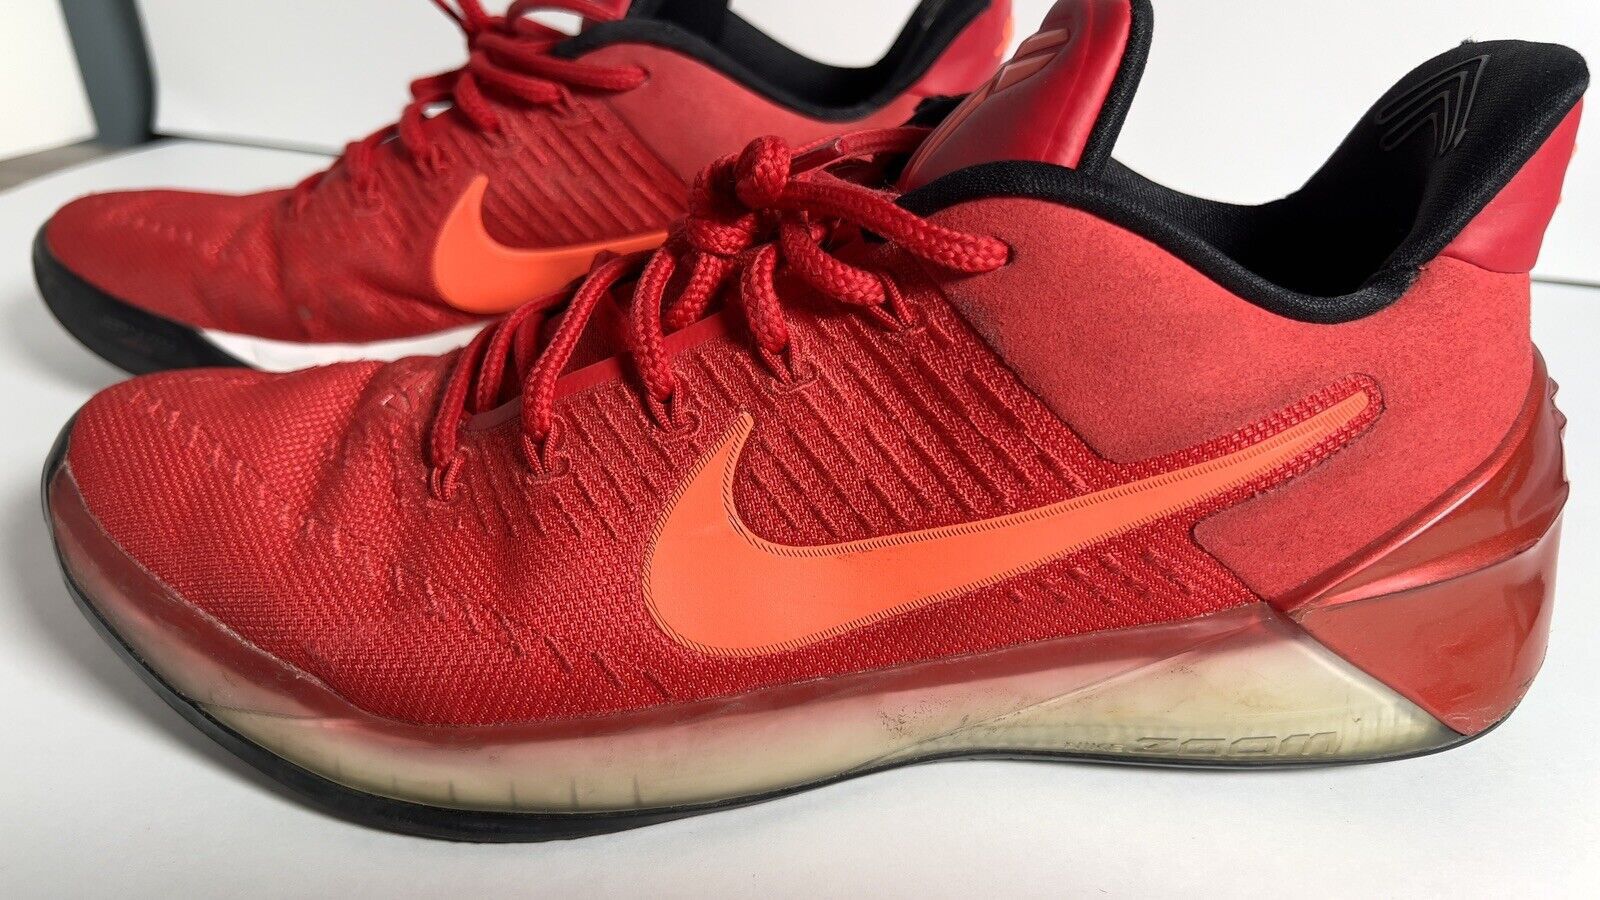 Mens Nike Kobe AD University Red Basketball Shoes Size 11 852425-608